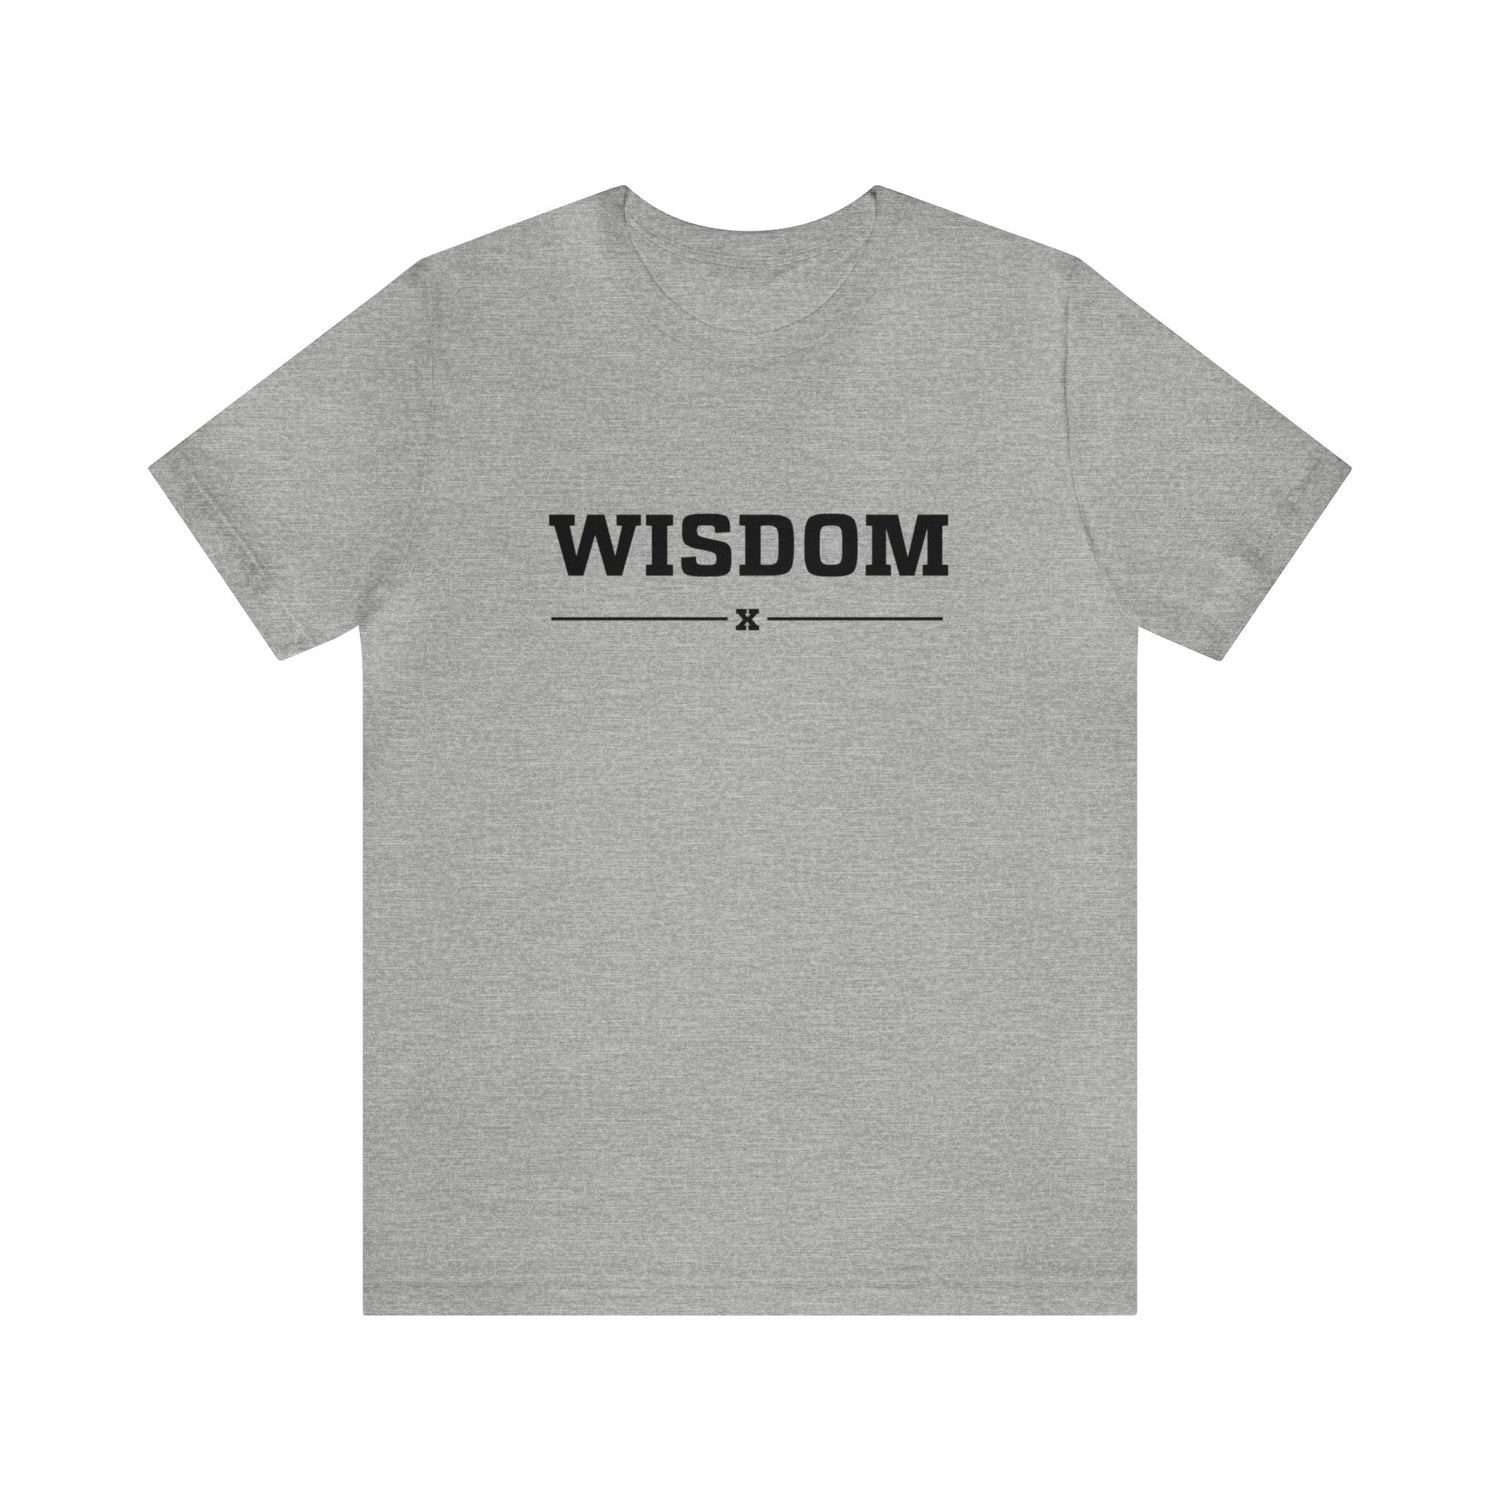 Tee-shirt de sagesse